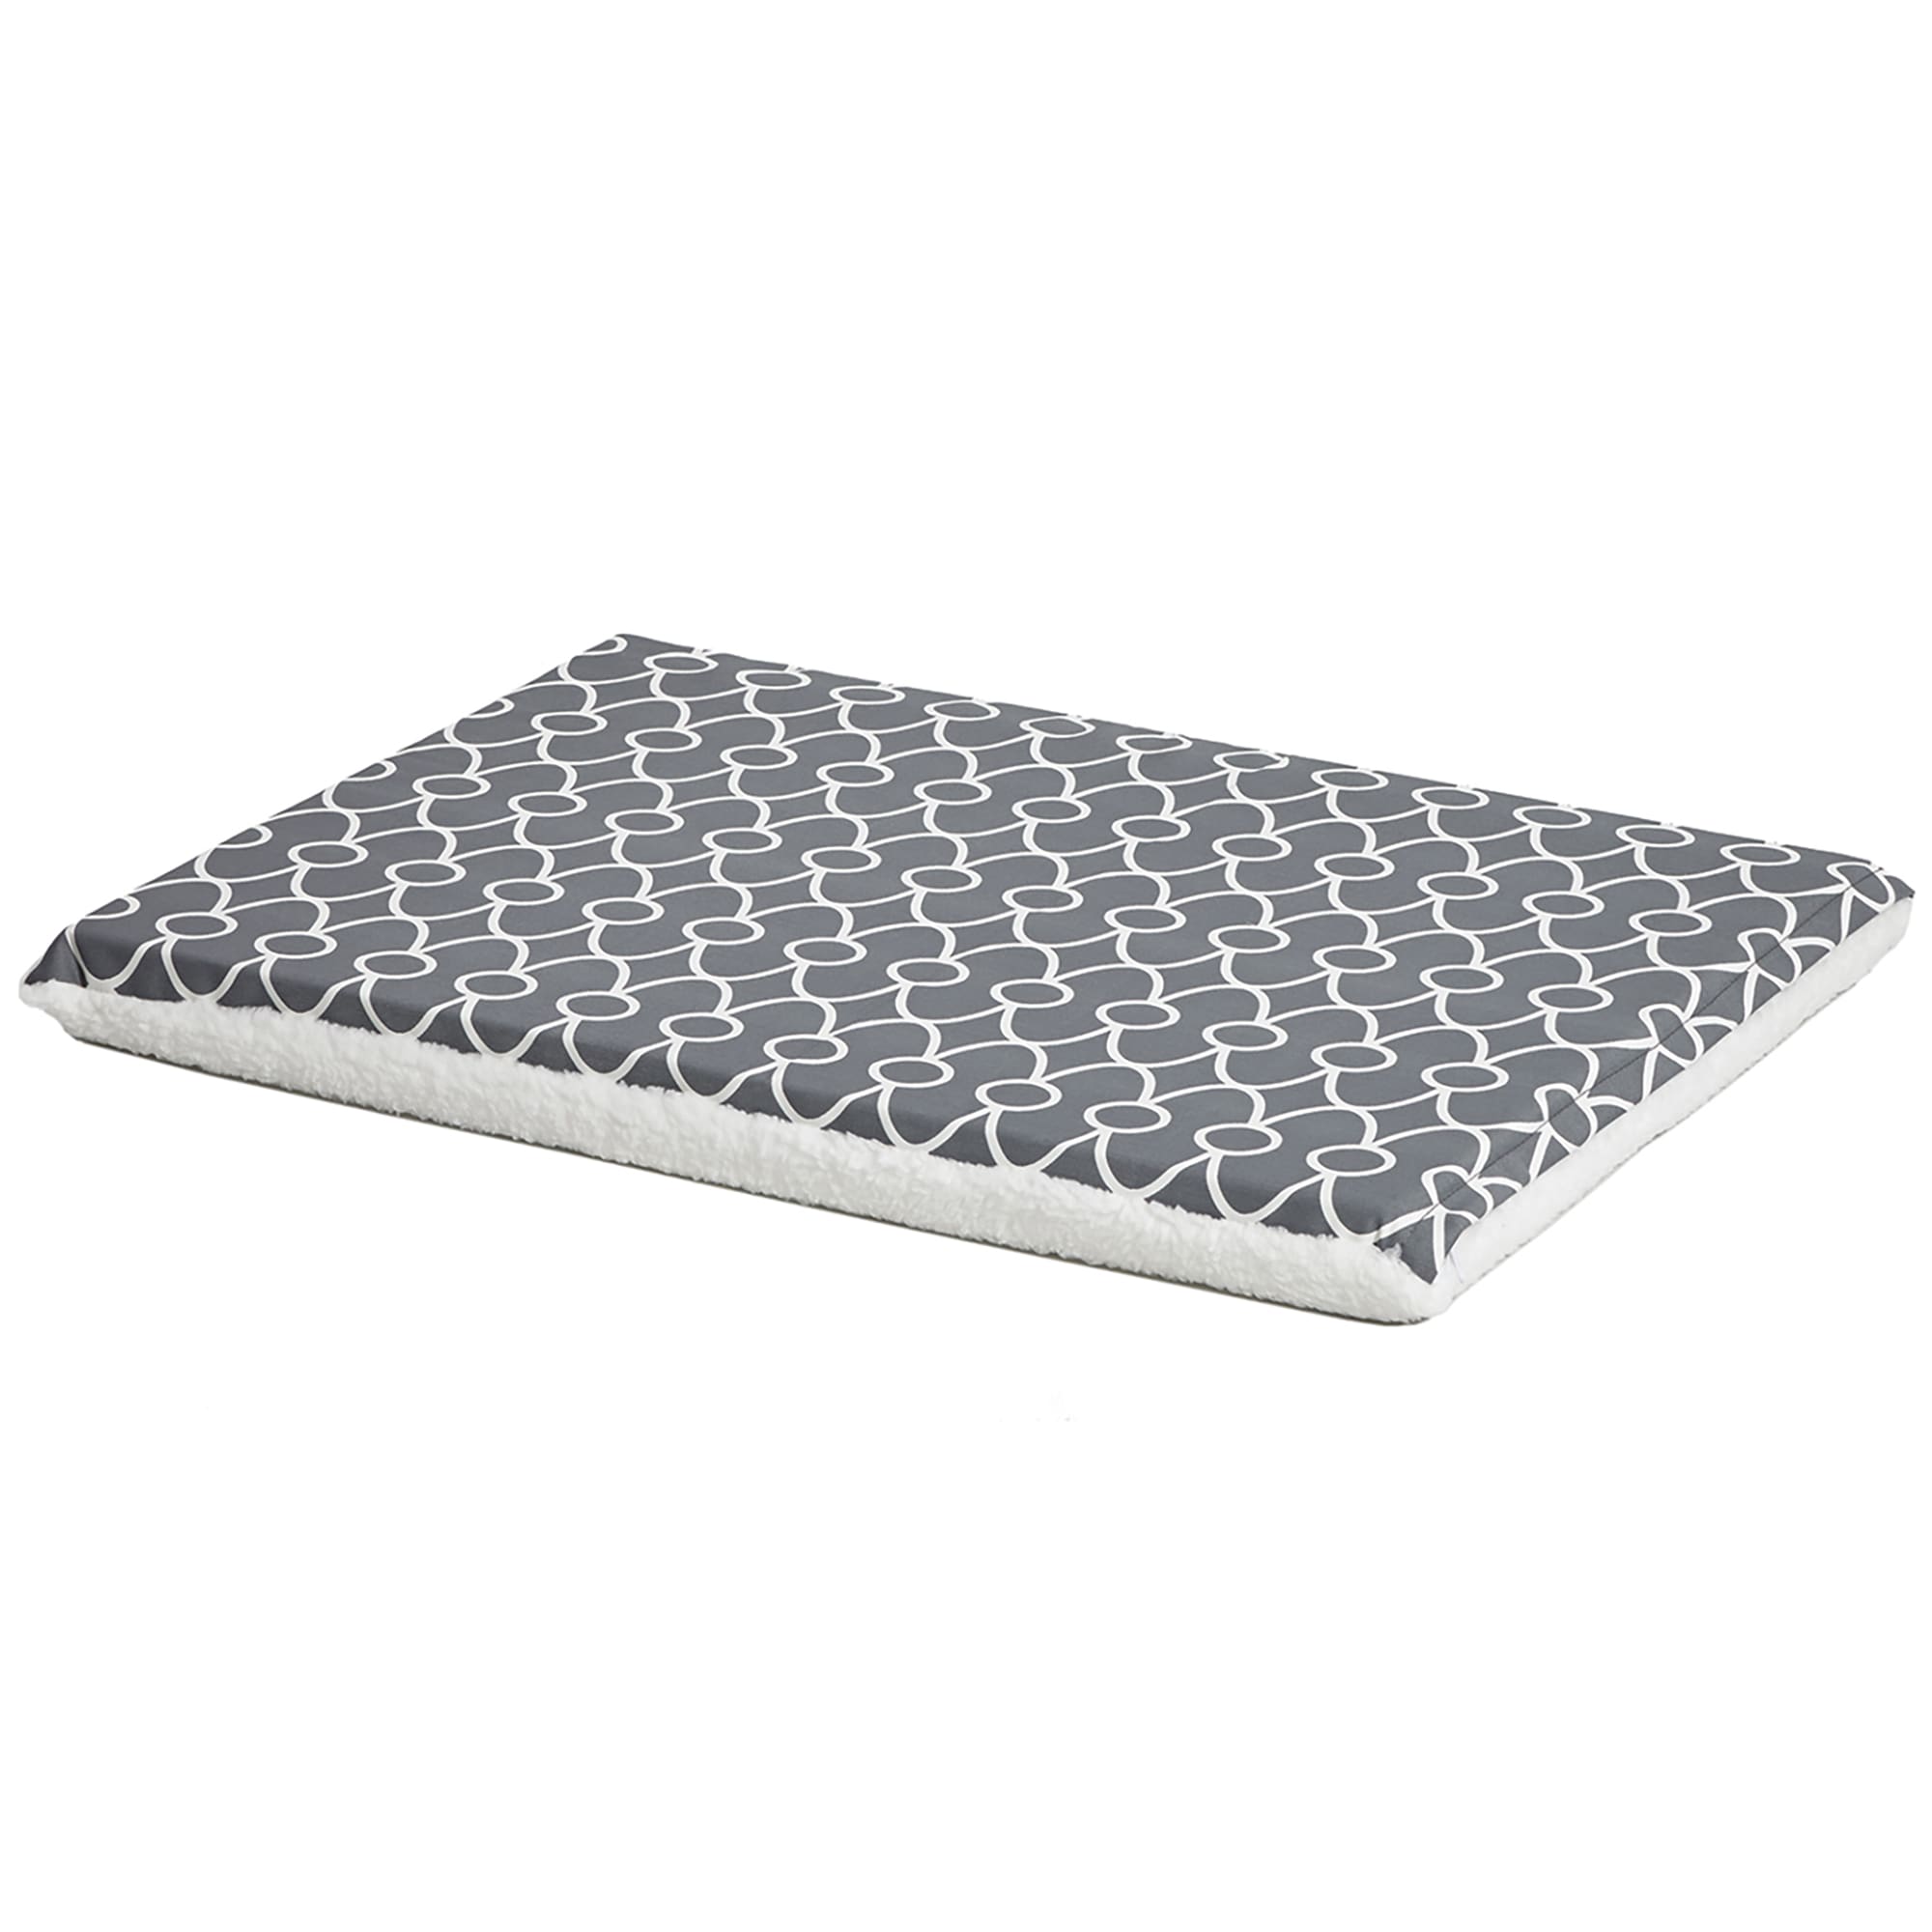 XL Reversible Microfiber Dish Drying Mat, Double Trellis, Grey, 18